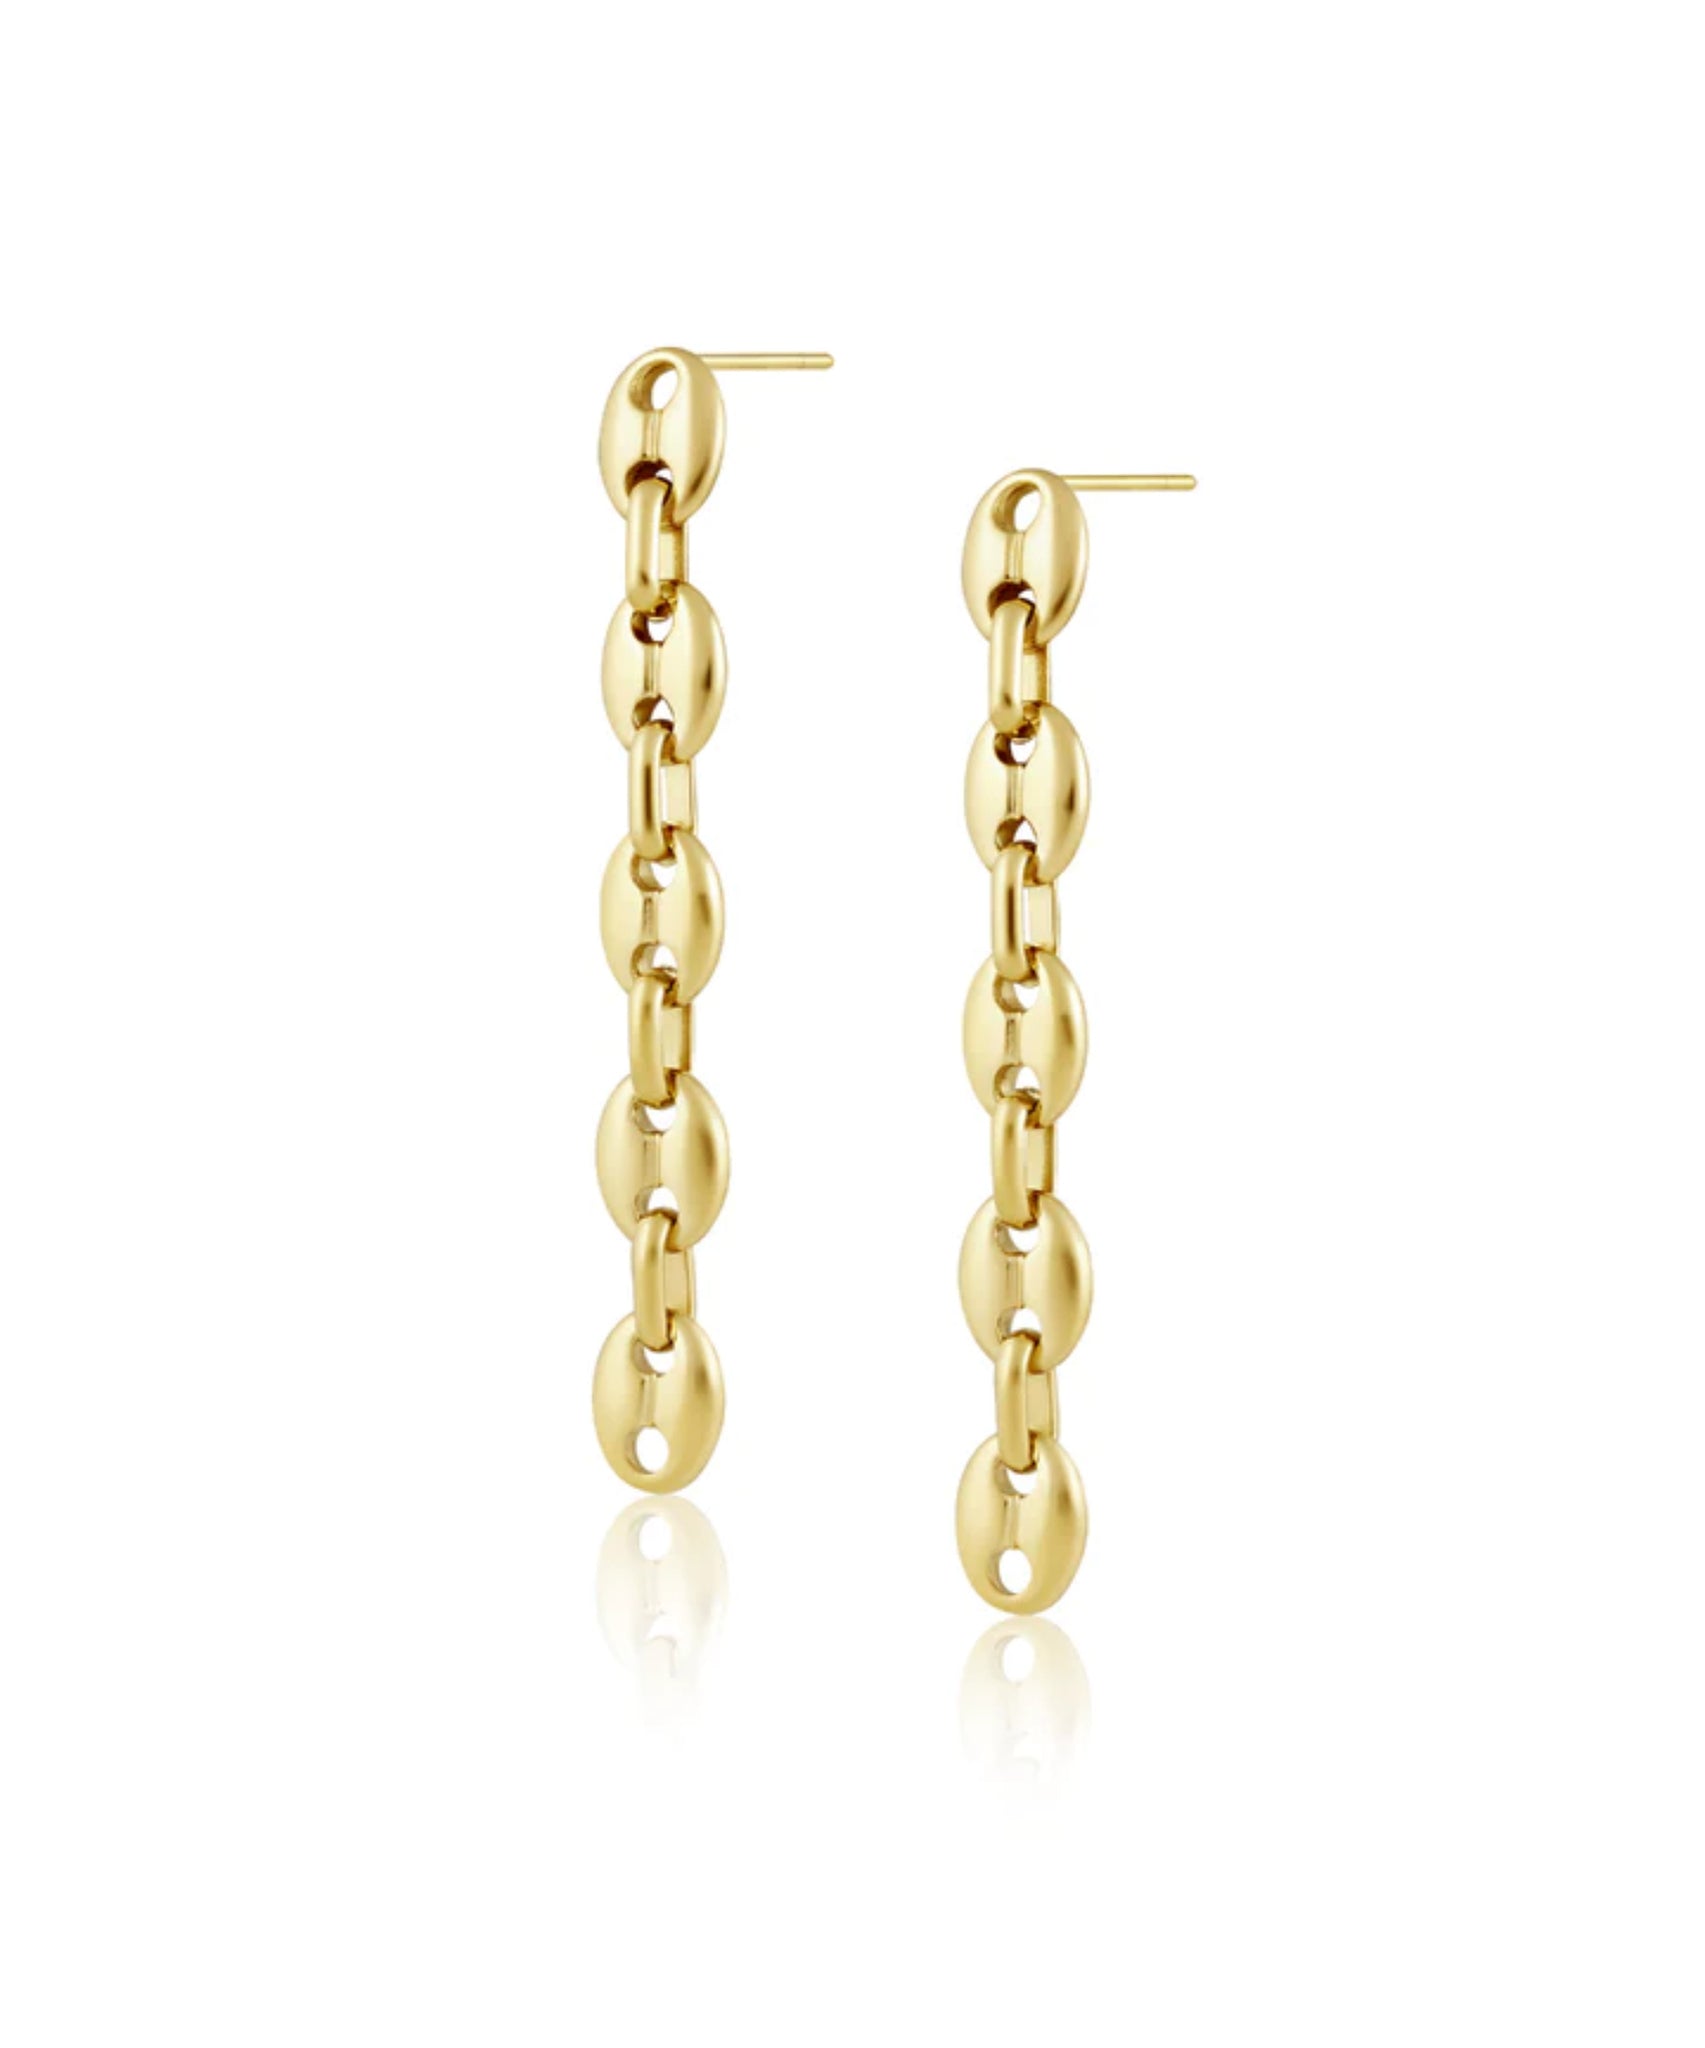 Tamra Link Chain Earrings